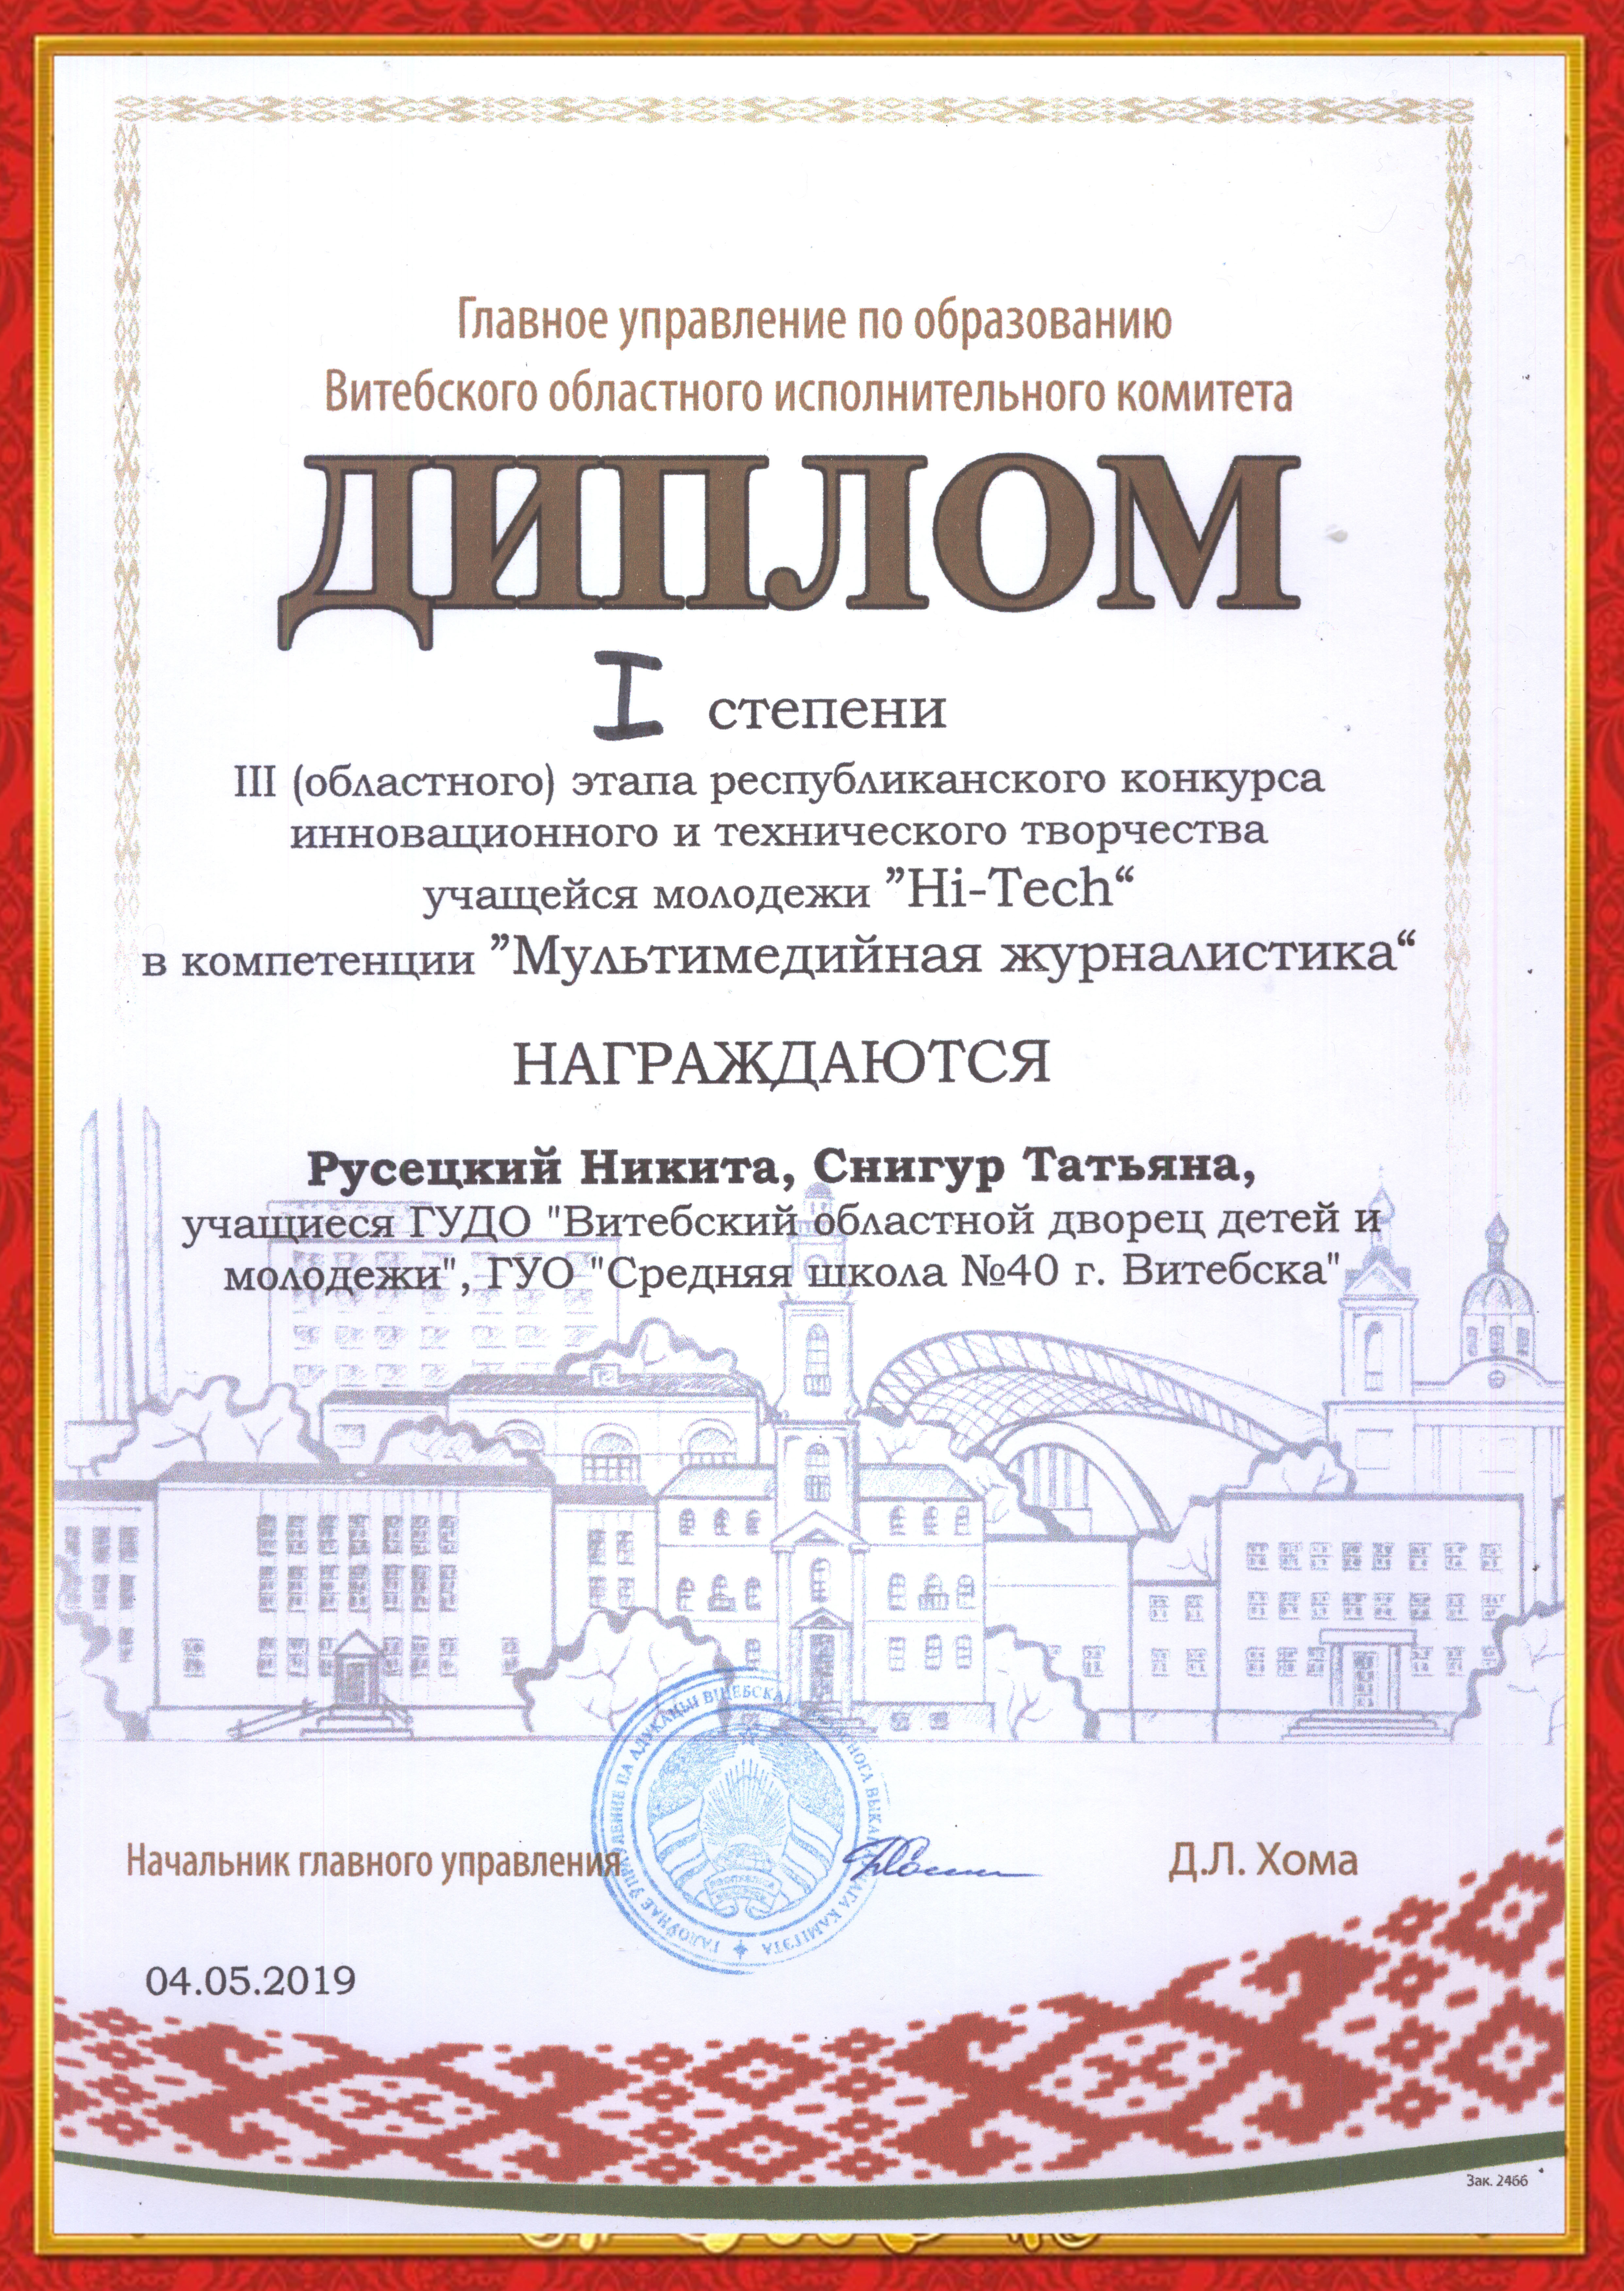 Diplom Rusetsky Hi Tech 2019